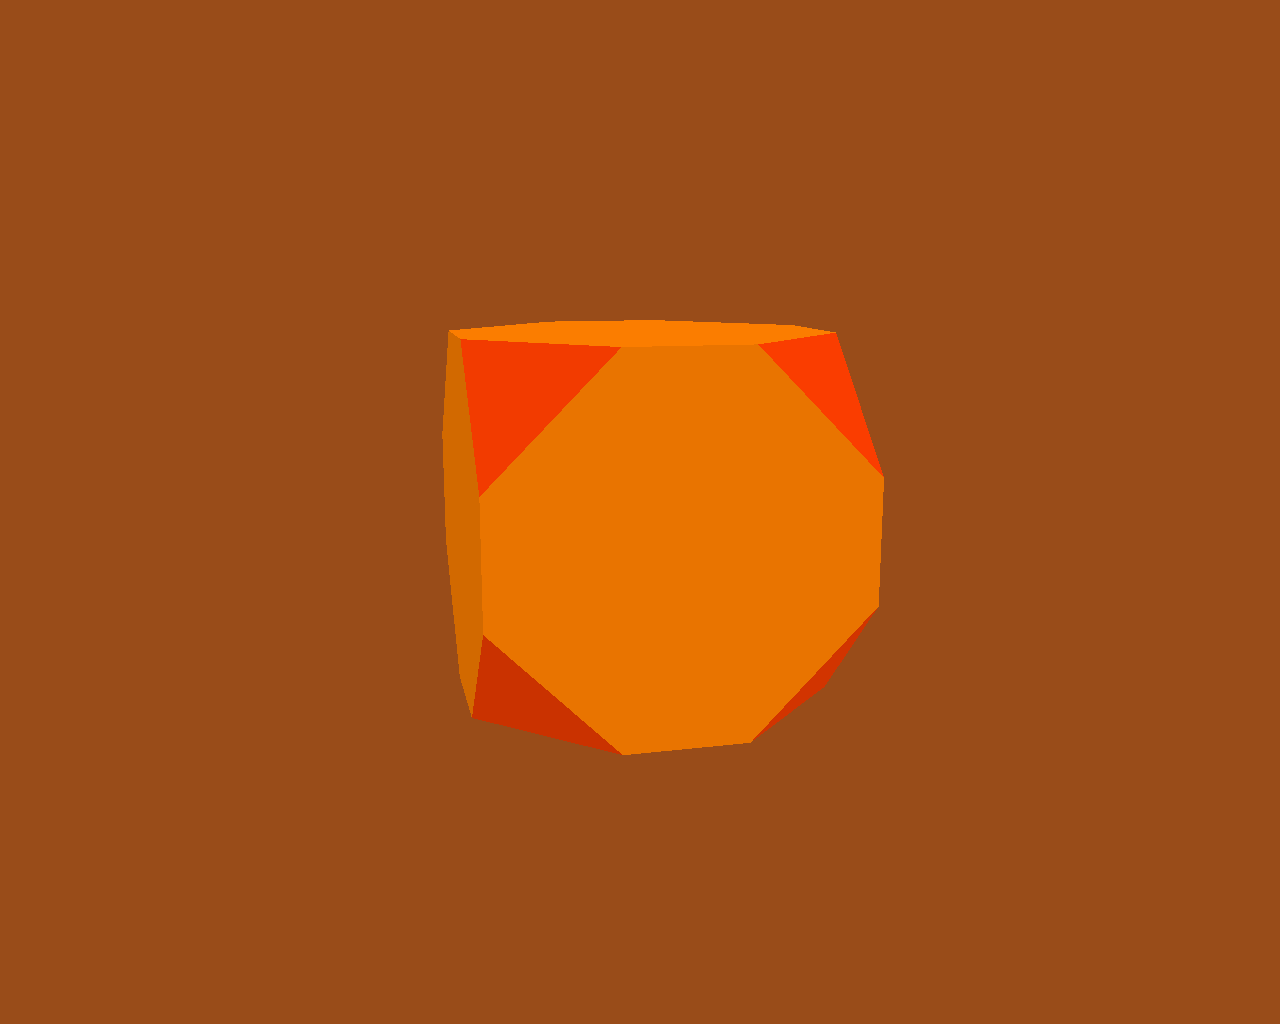 A truncated cube